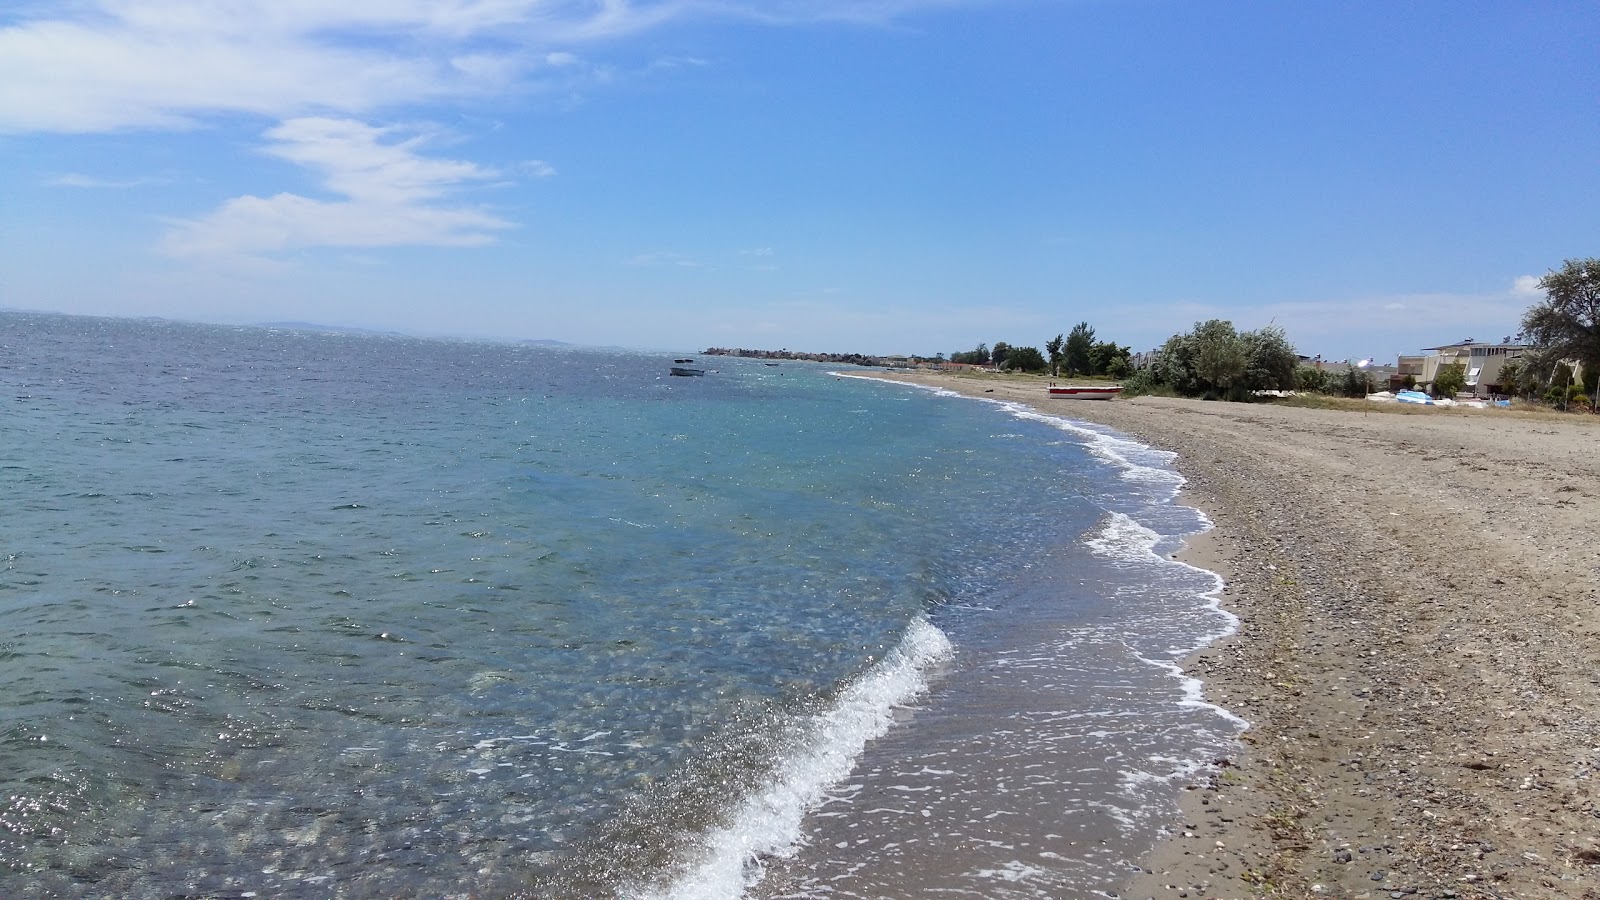 Fotografija Gulsah beach z turkizna čista voda površino